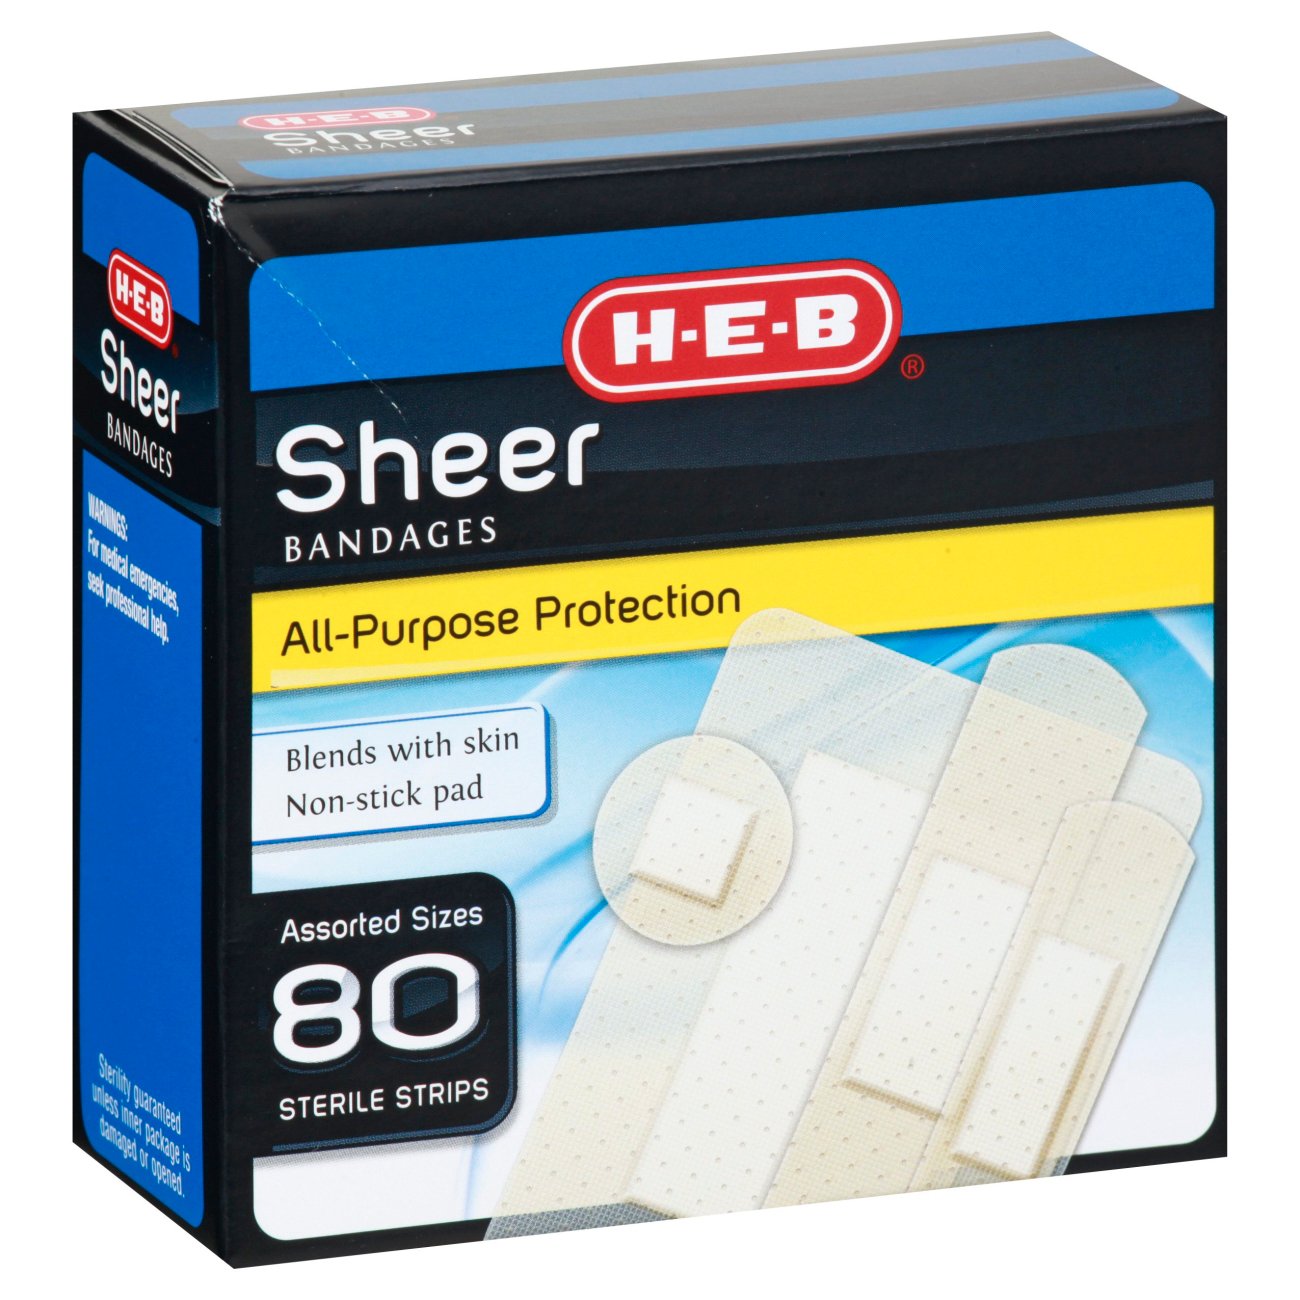 H-E-B Sheer All-Purpose Bandages Assorted Sizes - Shop Bandages